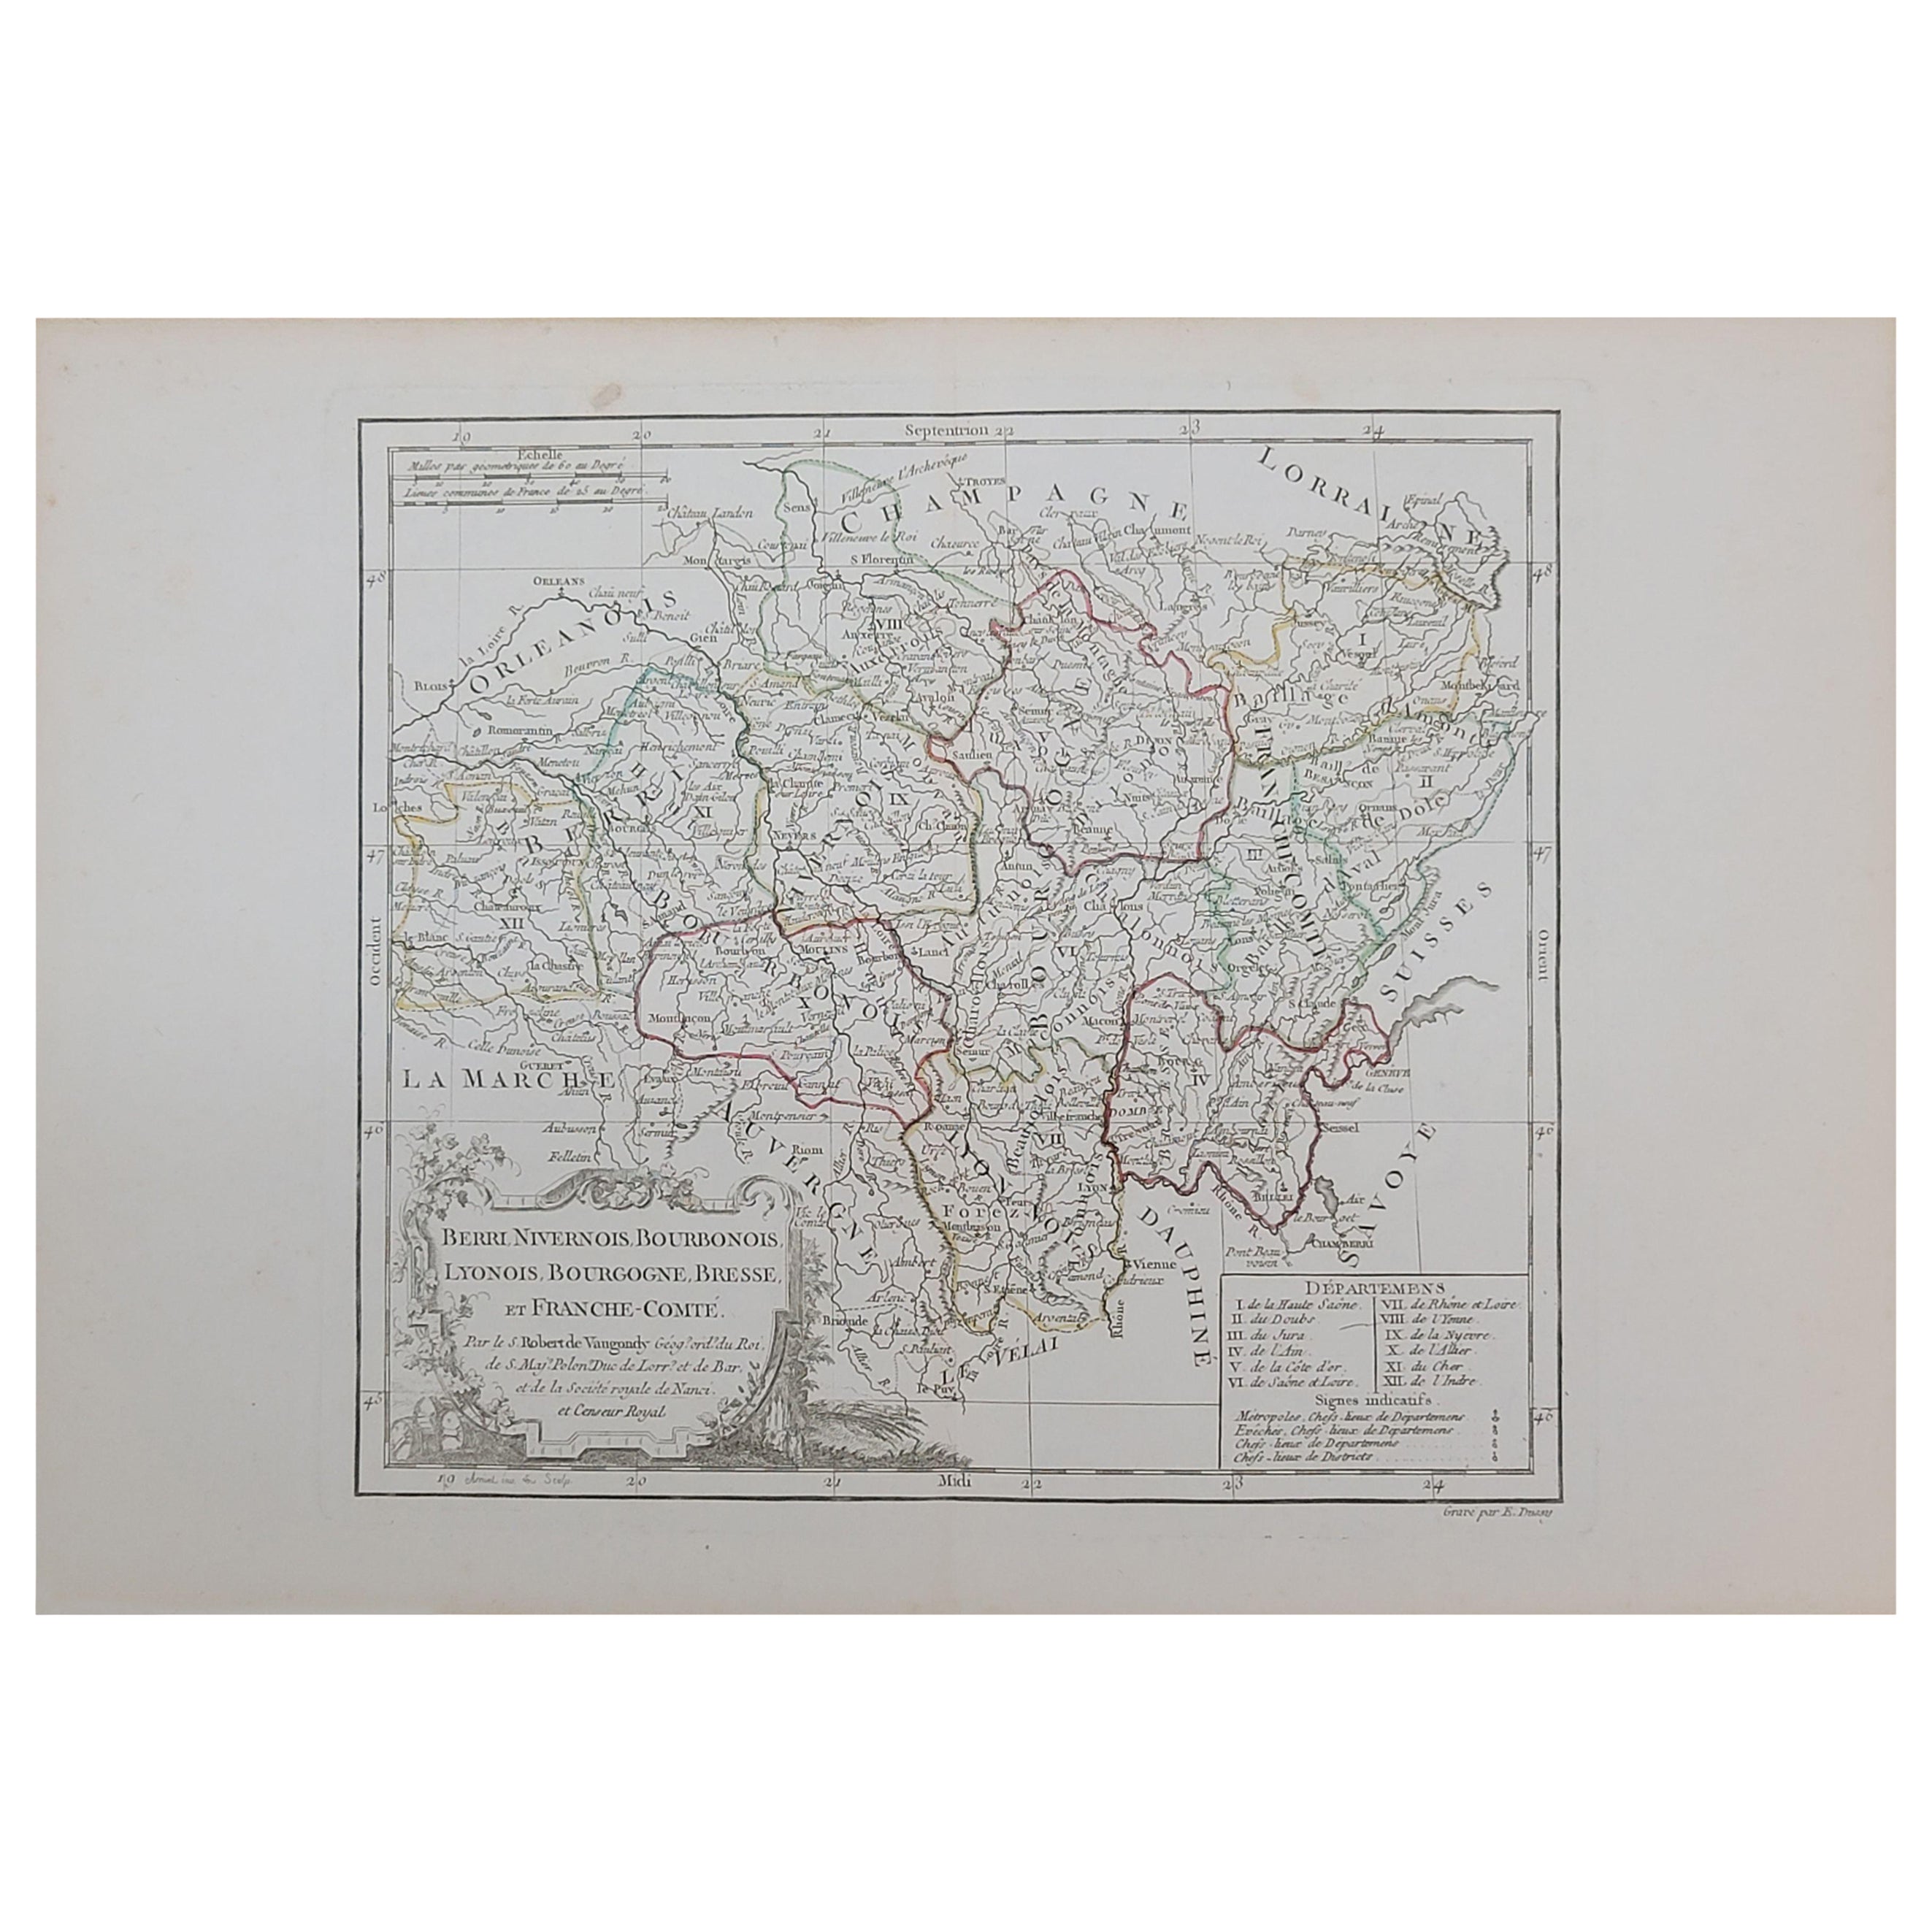 1762 Berri, Nivernois Bourbonois, Lyonois, Bourgogine, Bresse, et, Franche - Com For Sale